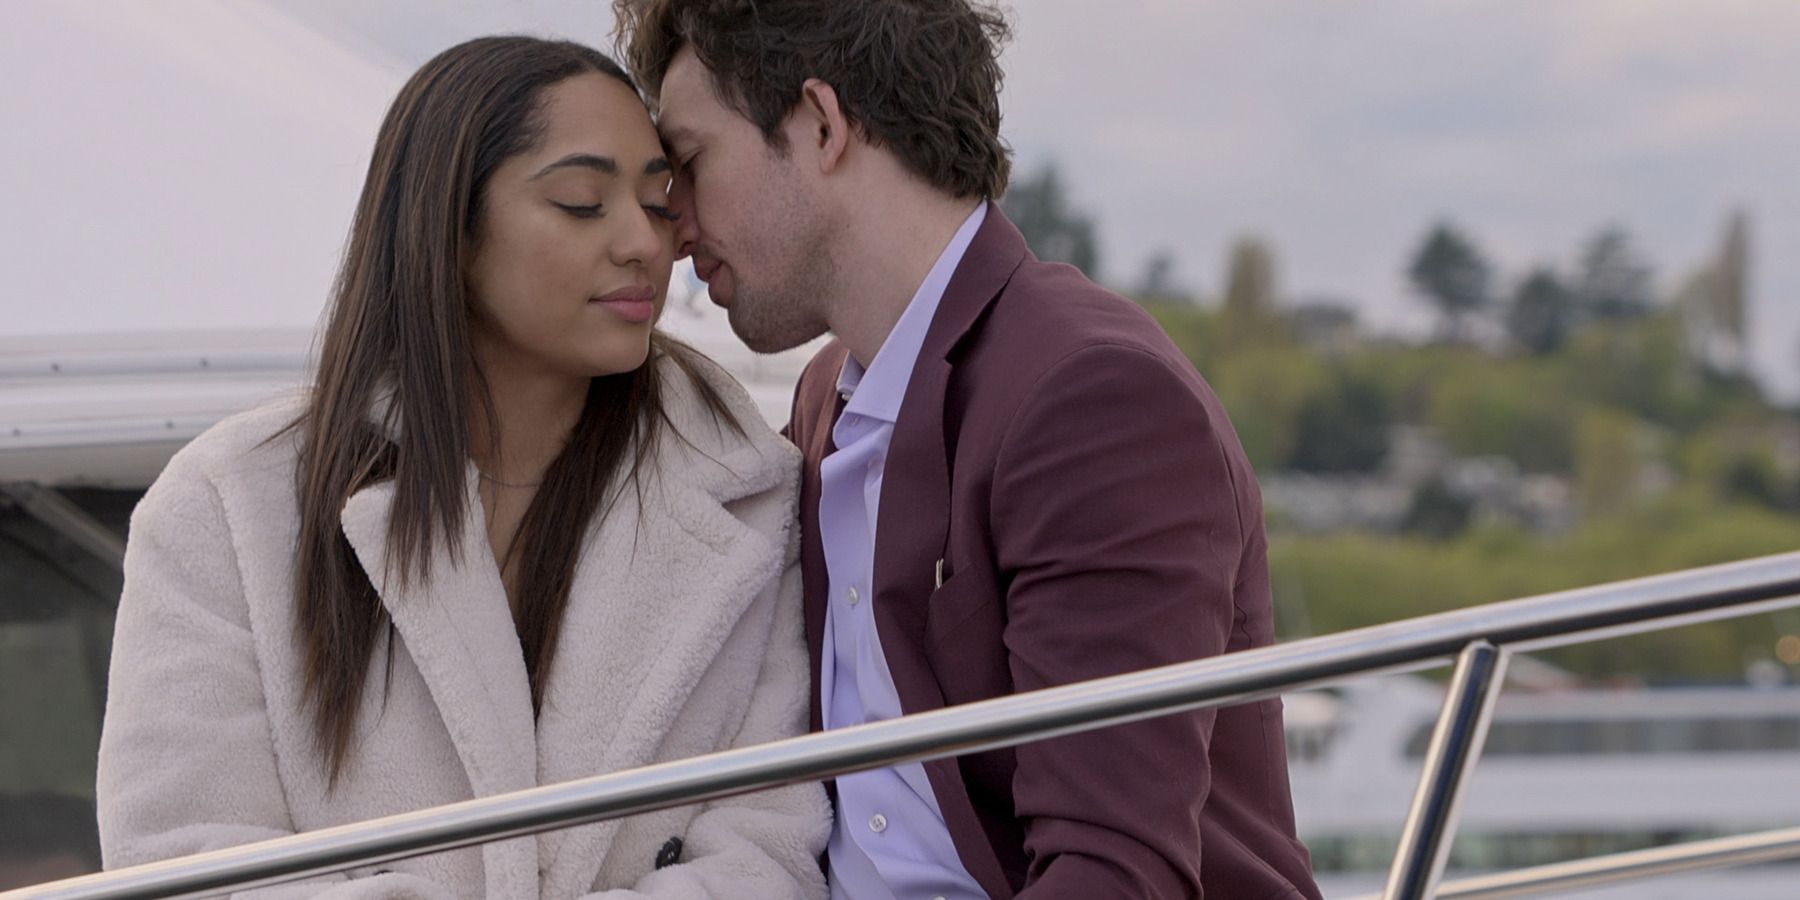 Love is Blind season 4 stars Bliss Poureetezadi and Zack Goytowski on a boat